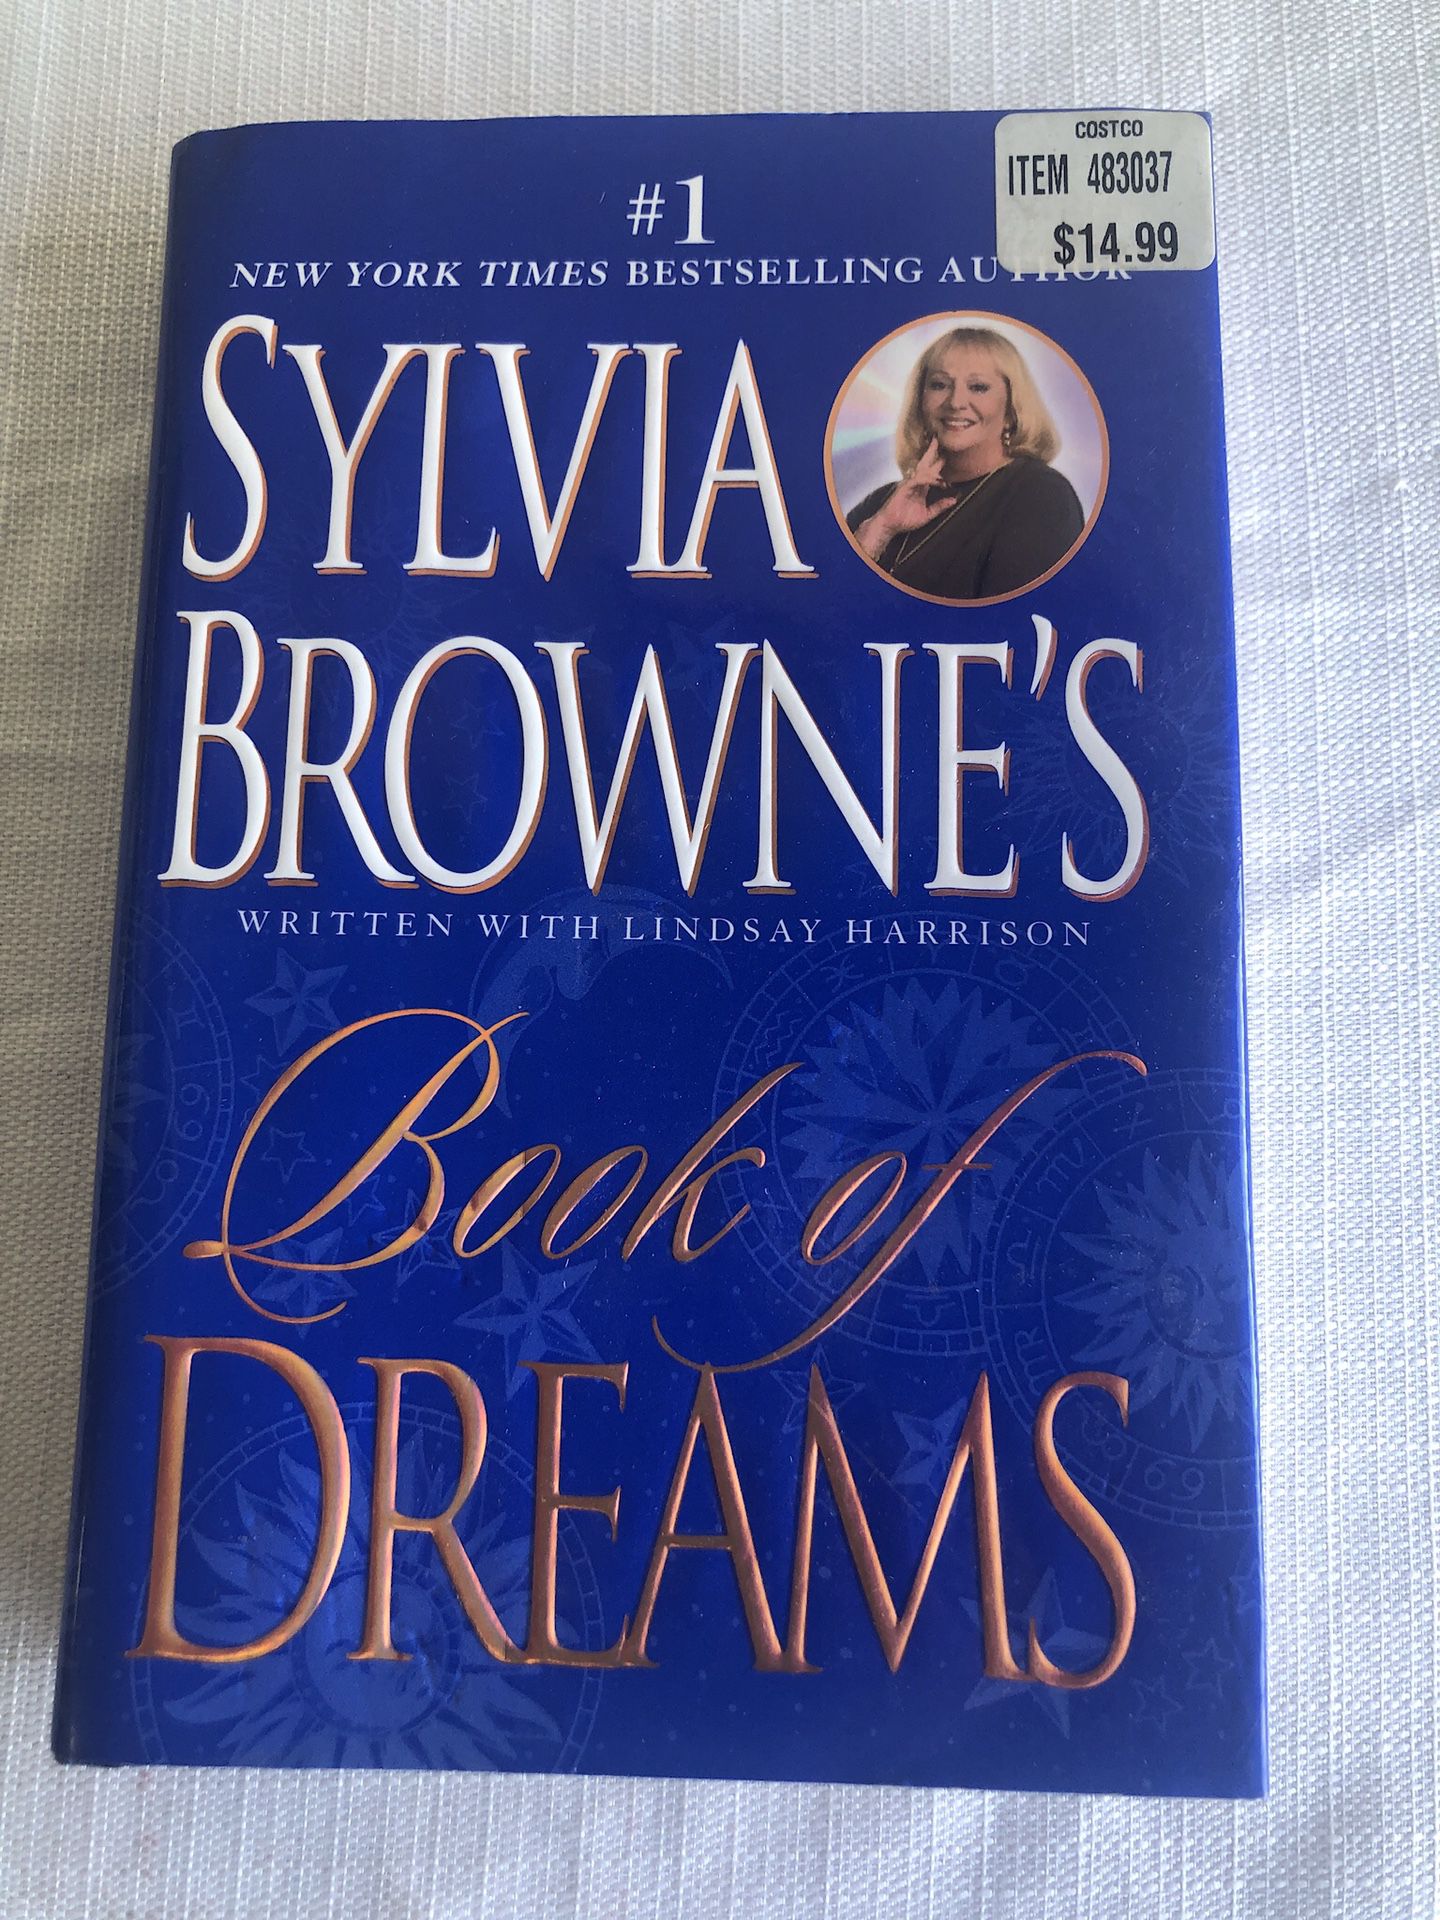 Autographed Sylvia Brown’s book of dreams